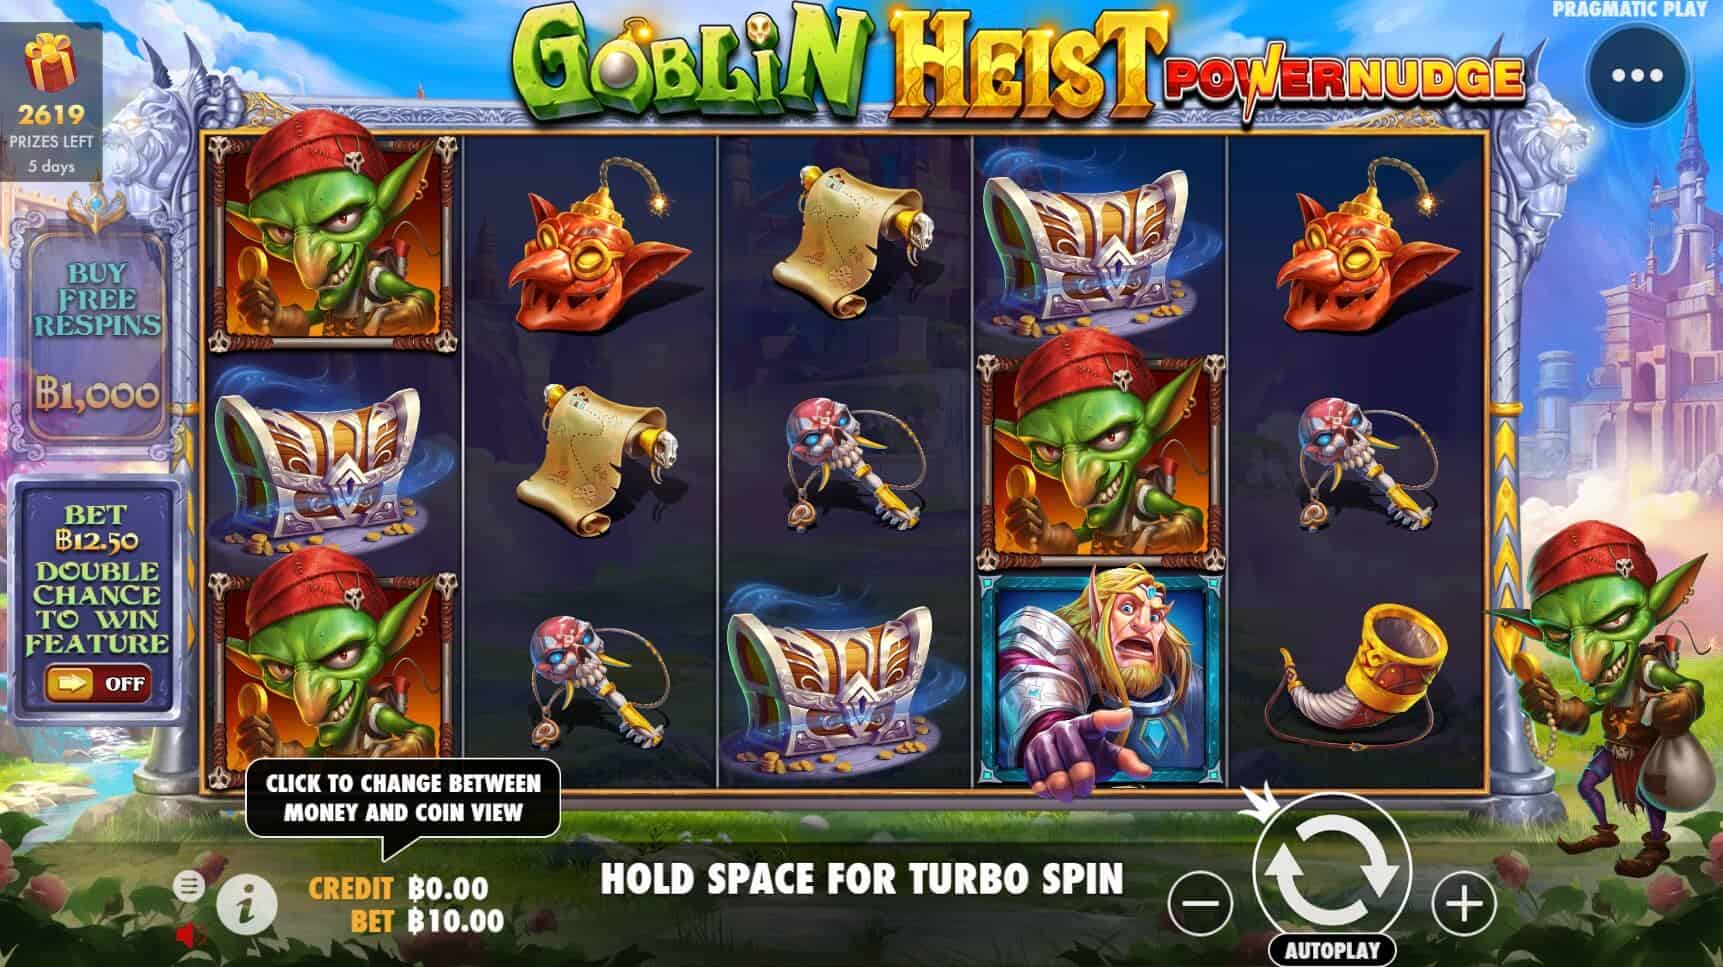 Goblin Heist Powernudge เกมสล็อต เว็บตรง จากค่าย Pragmatic Play joker123th